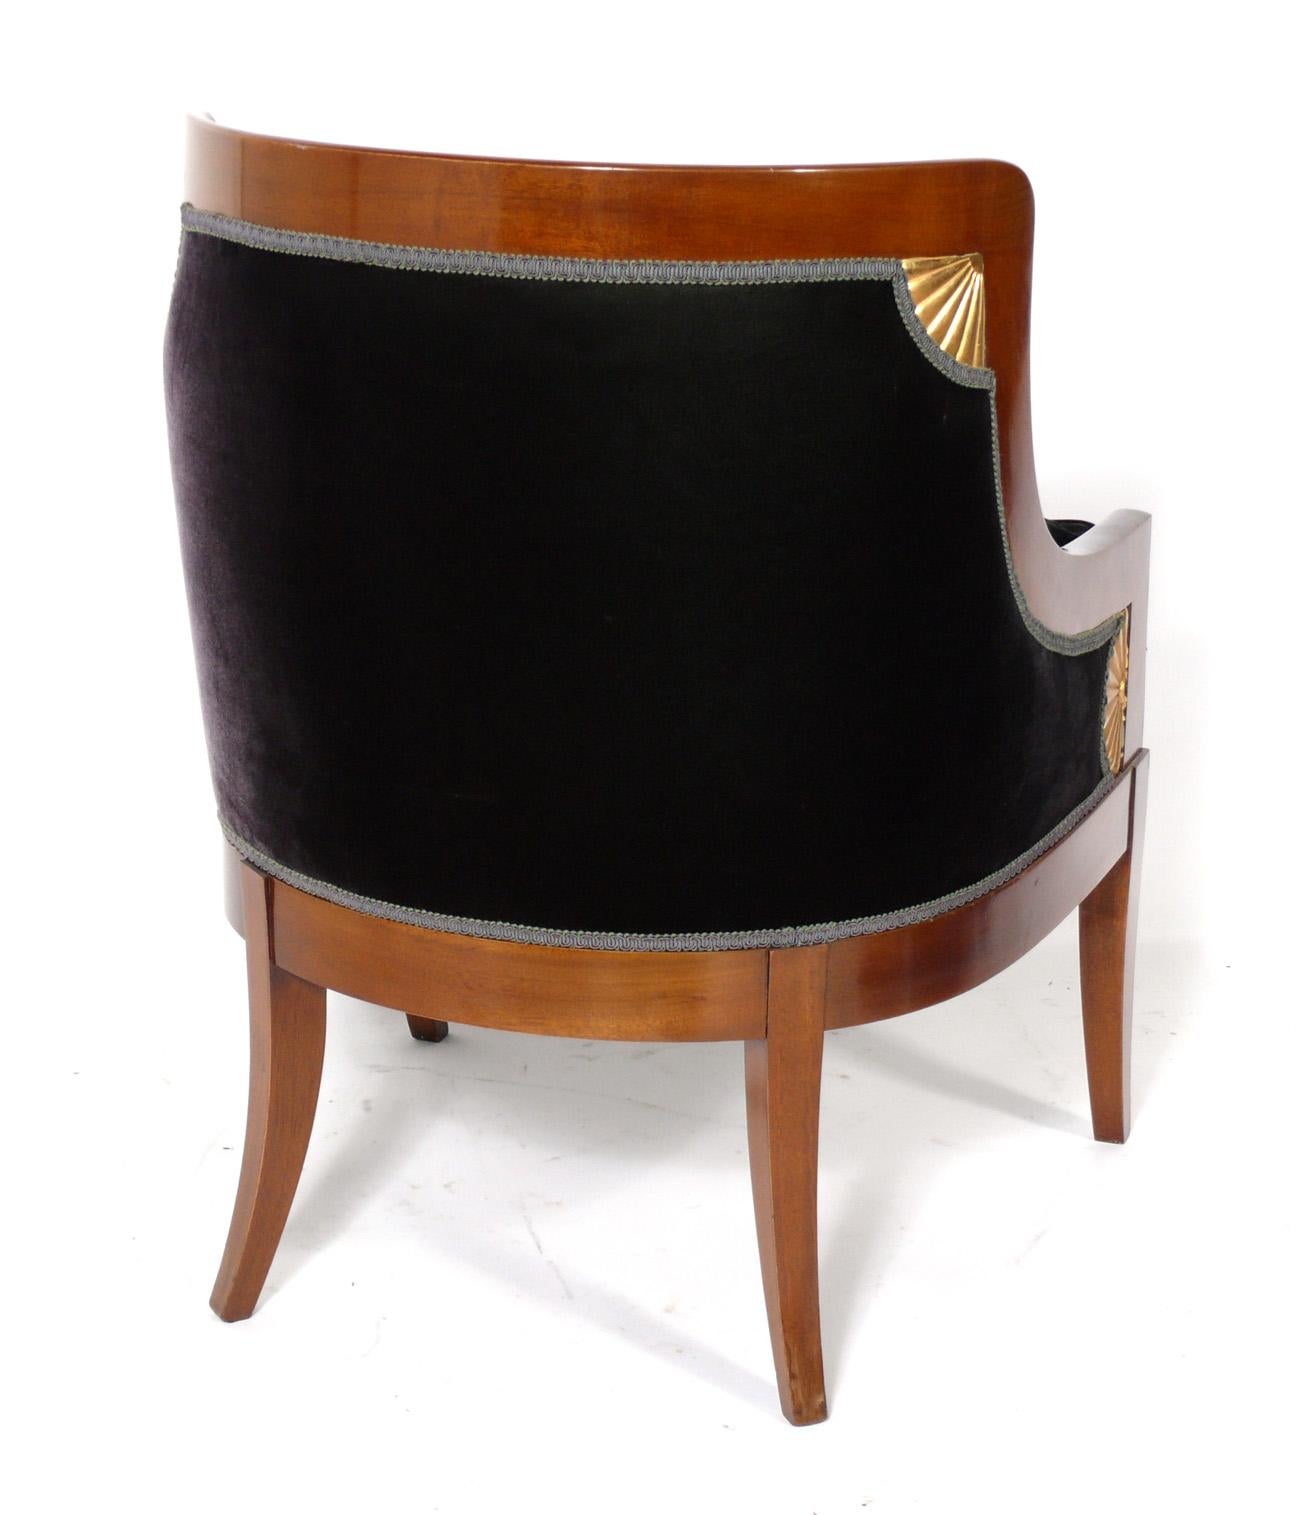 Elegant Regency Revival Chair in Forest Green Velvet In Good Condition For Sale In Atlanta, GA